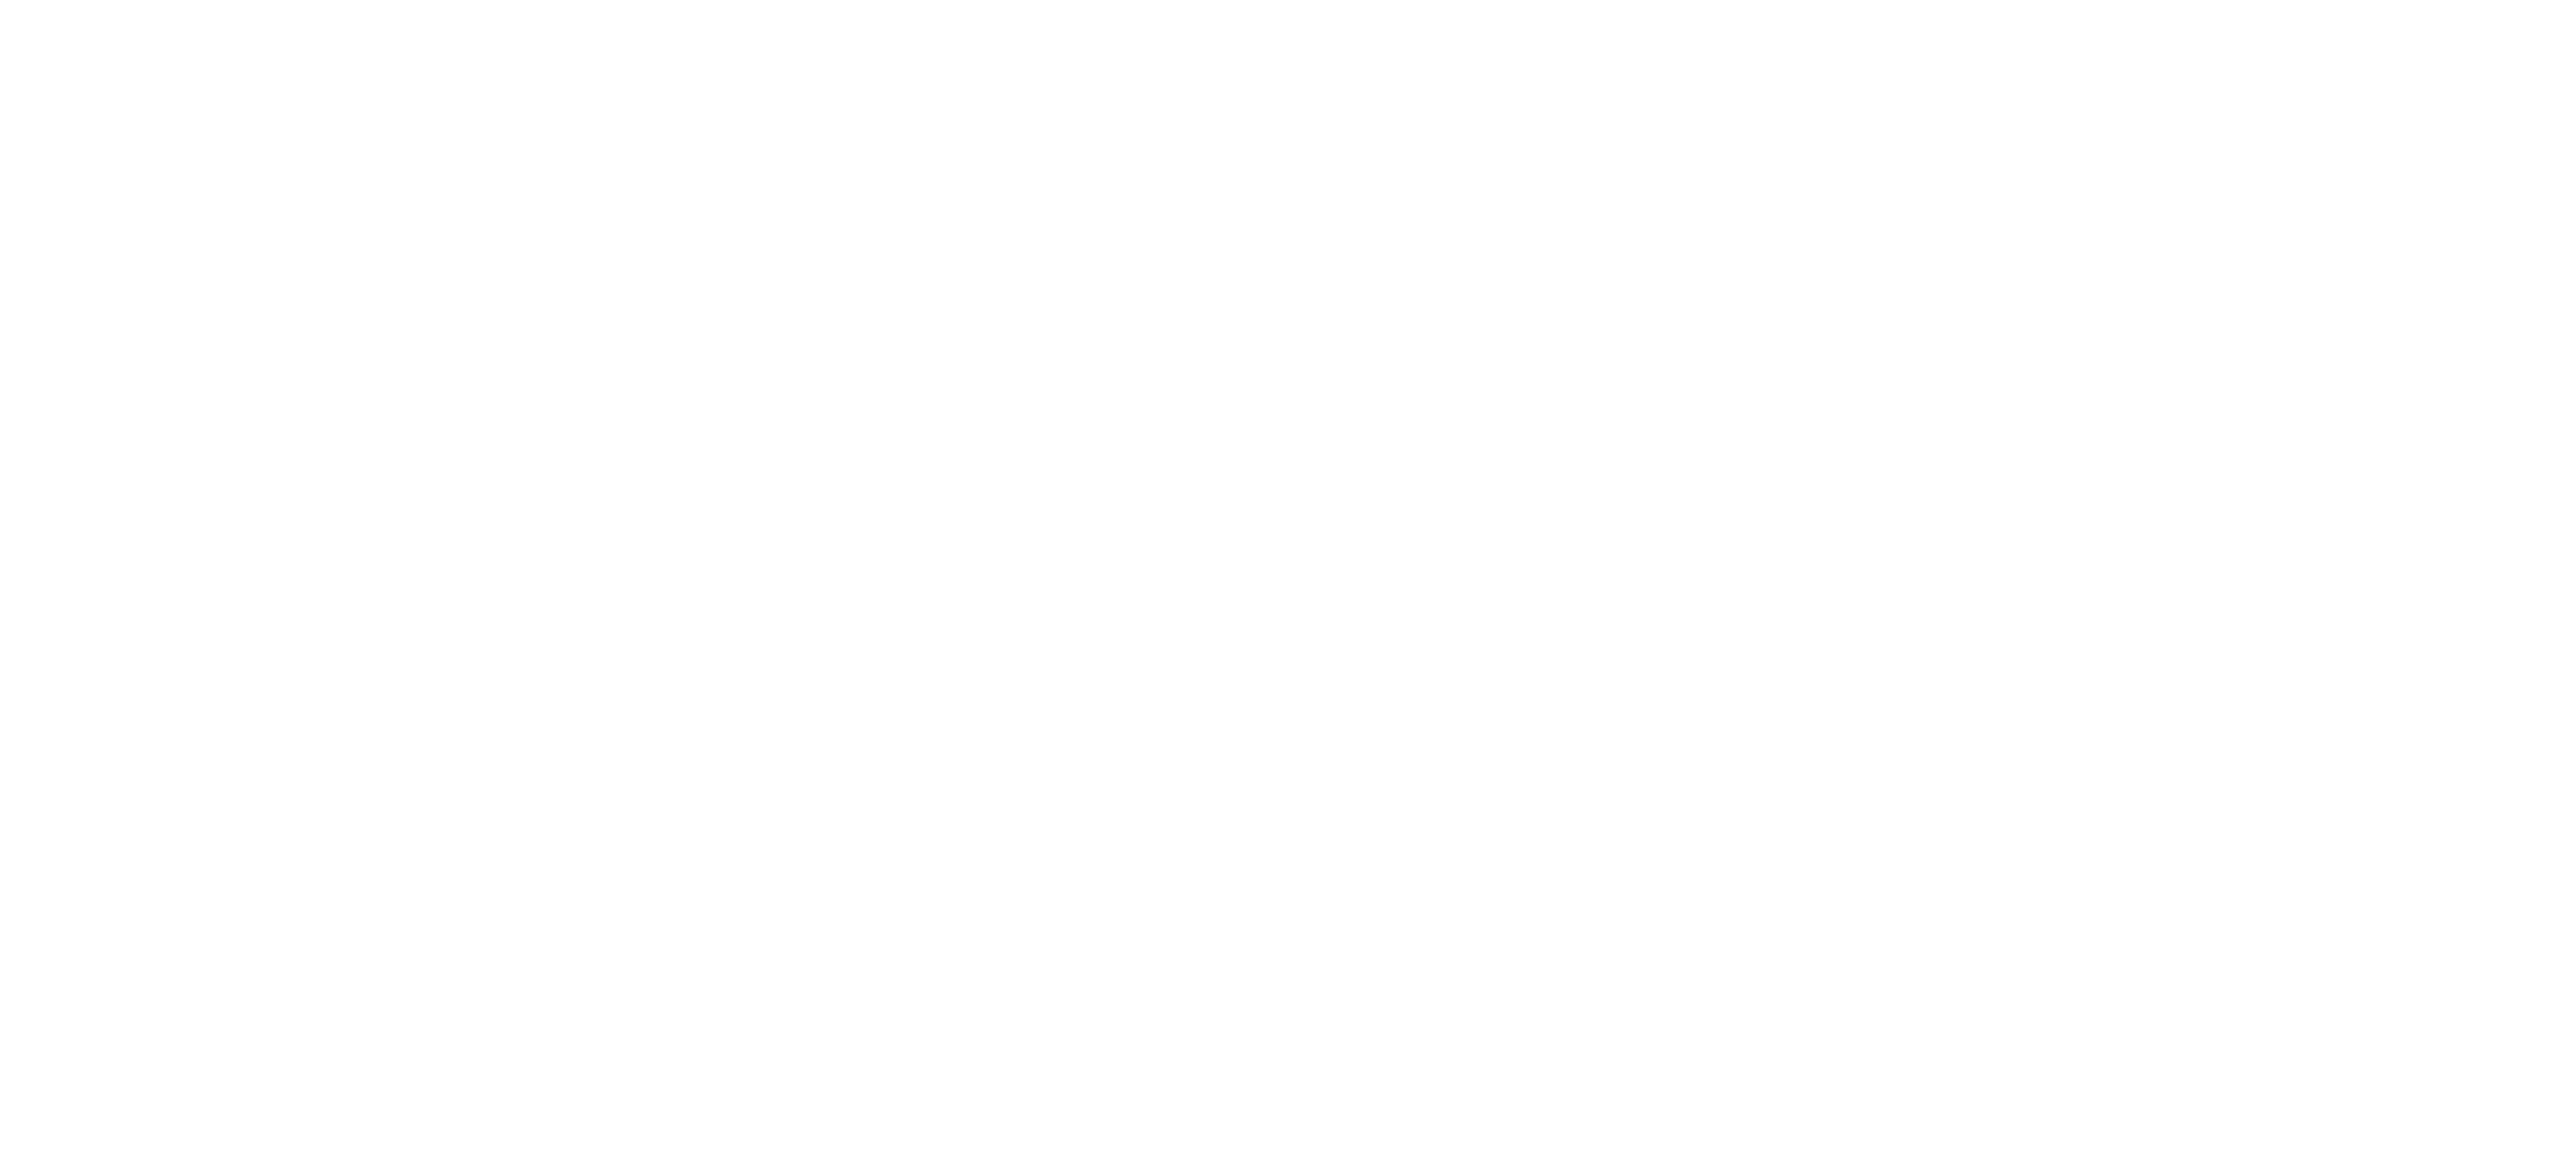 Swept Away Cottages